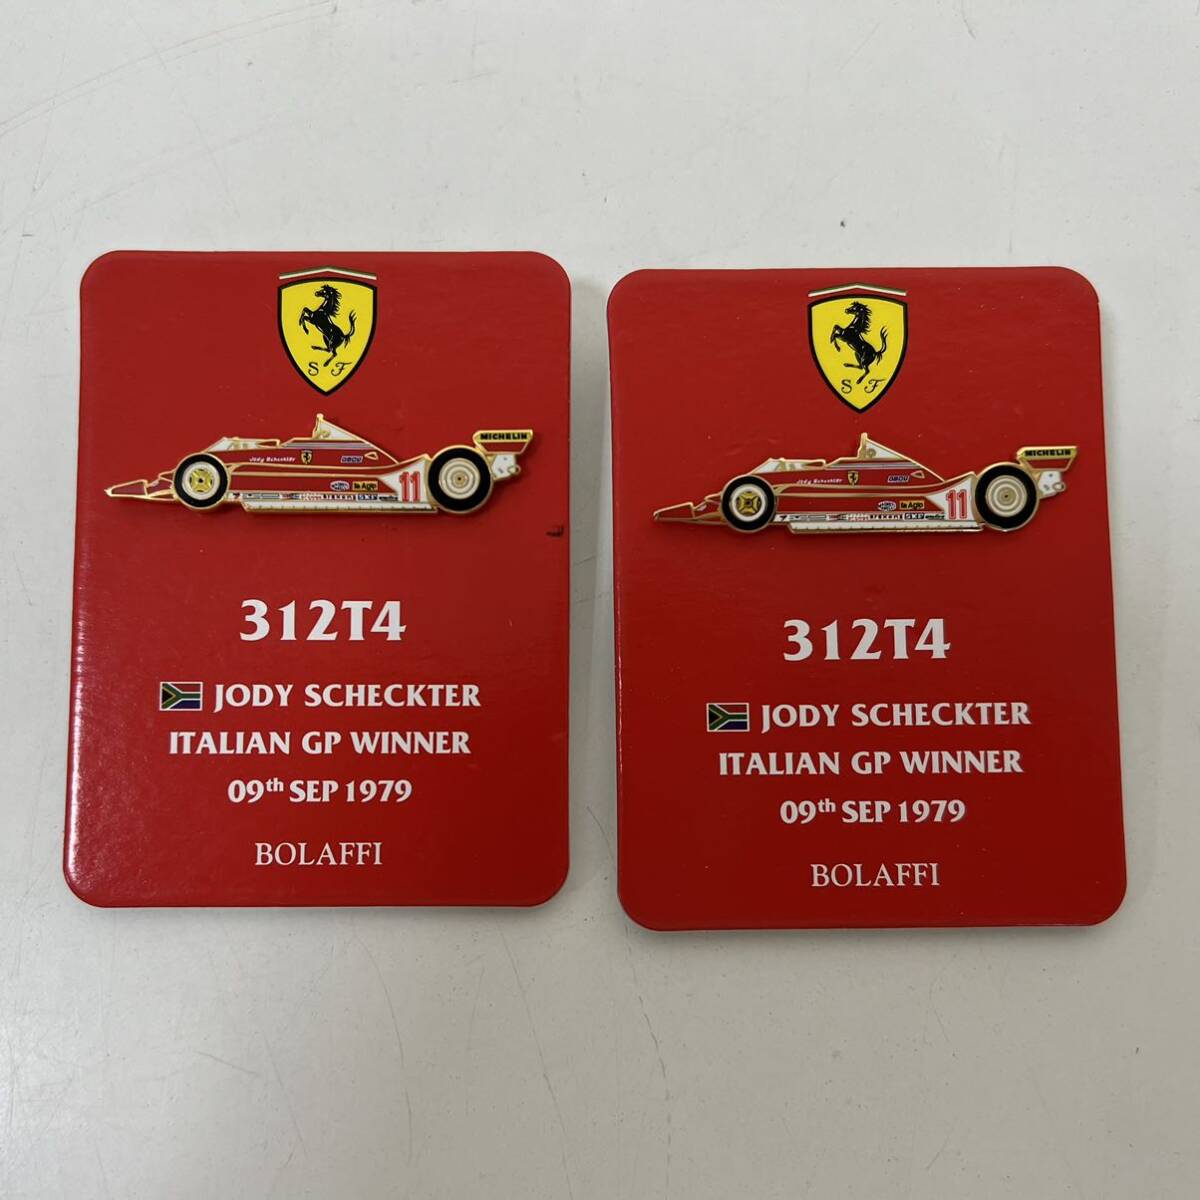 BOLAFFI производства Ferrari Ferrari булавка z значок шлем булавка z и т.п. 10 видов всего 23 шт суммировать комплект 